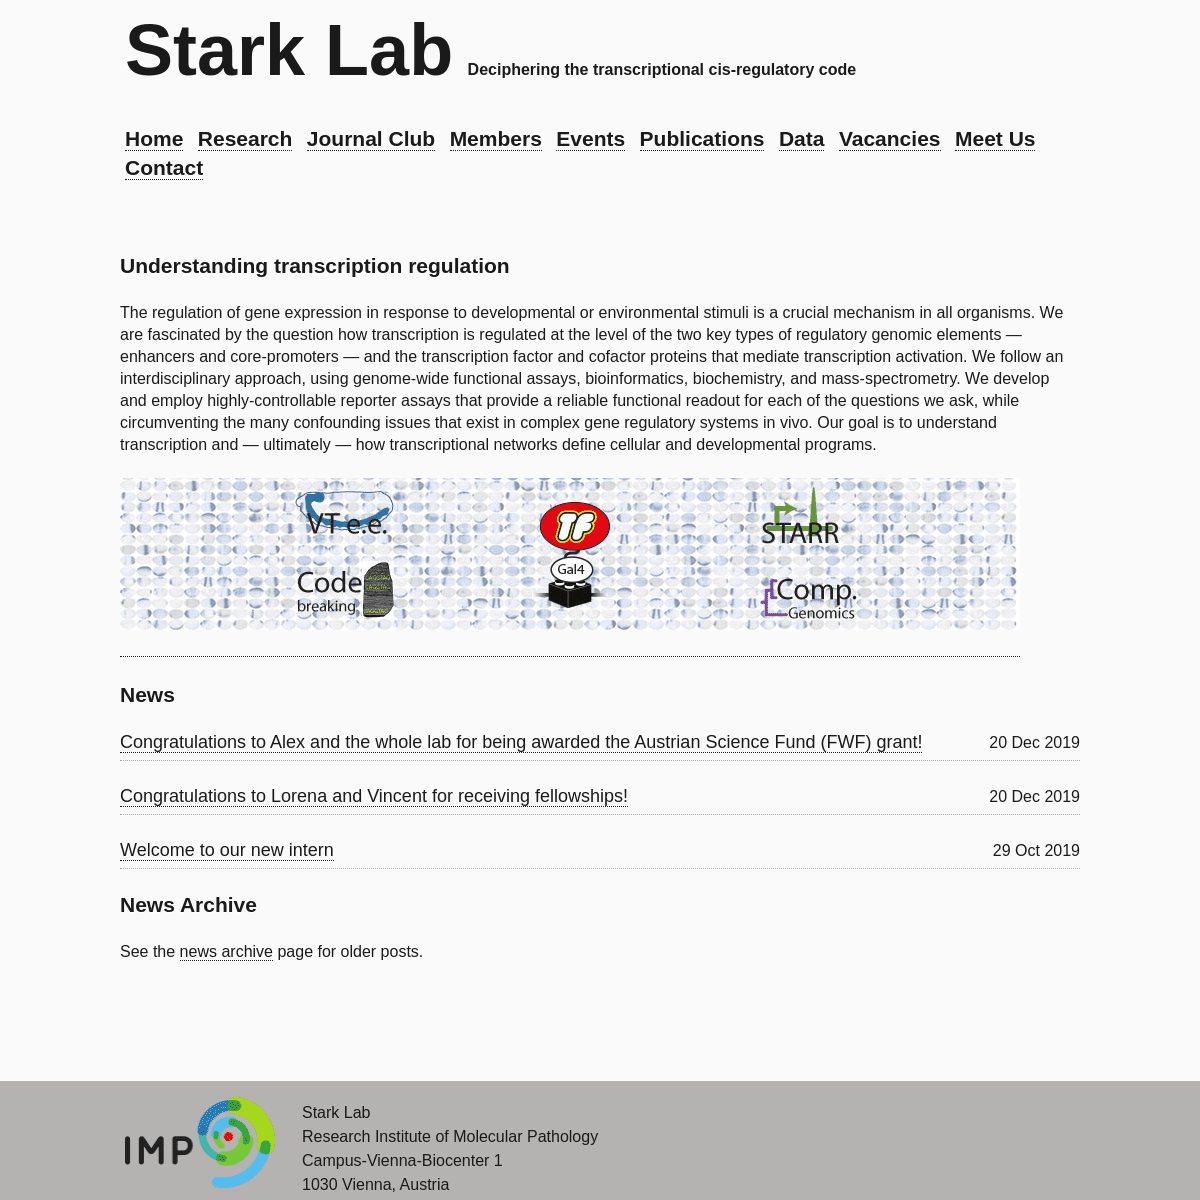 A complete backup of starklab.org